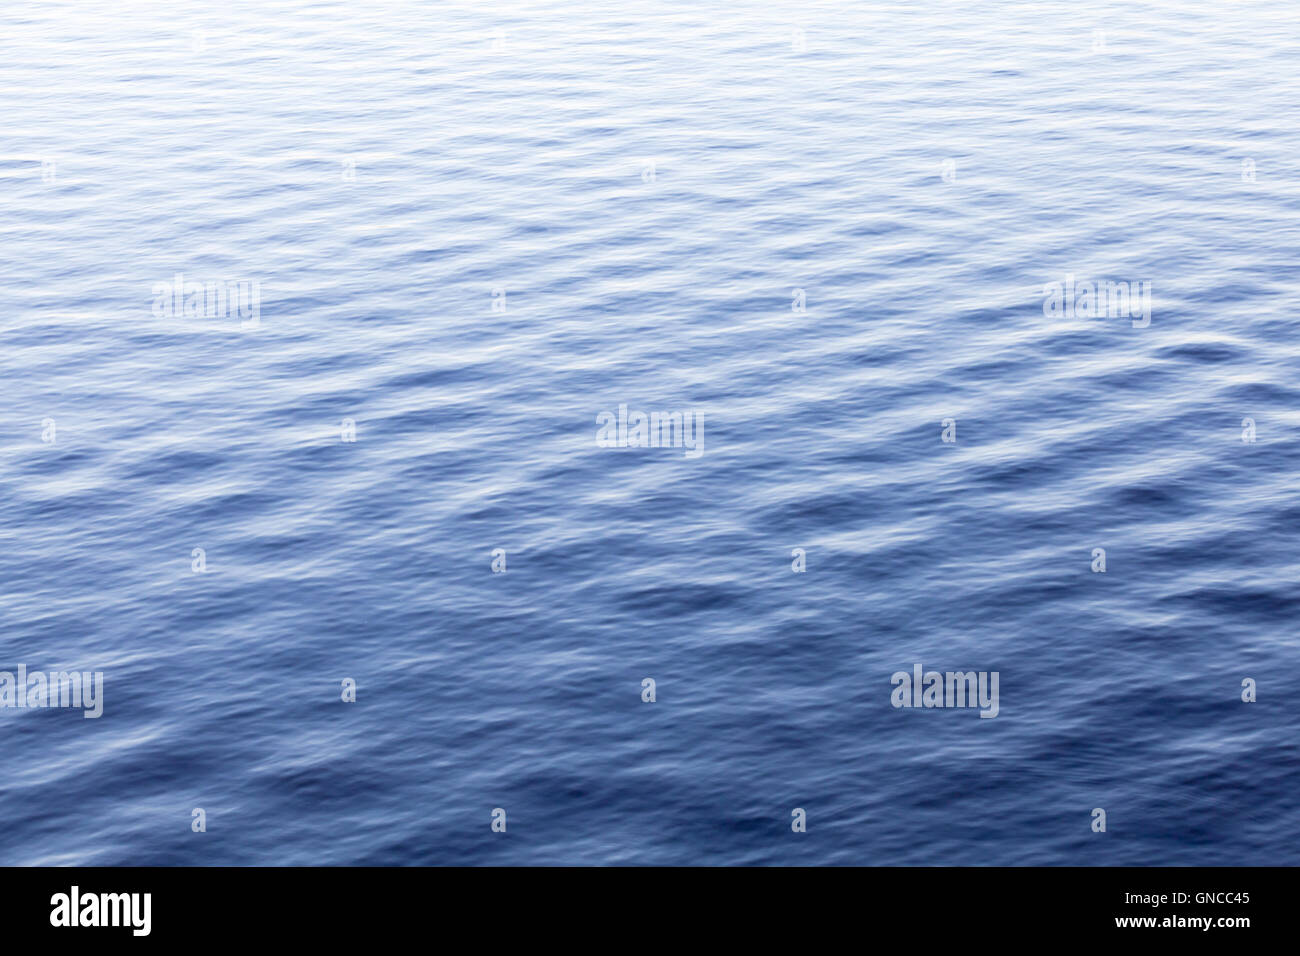 Blaues Meer Wasseroberfläche mit Kräuselung, Foto Hintergrundtextur Stockfoto